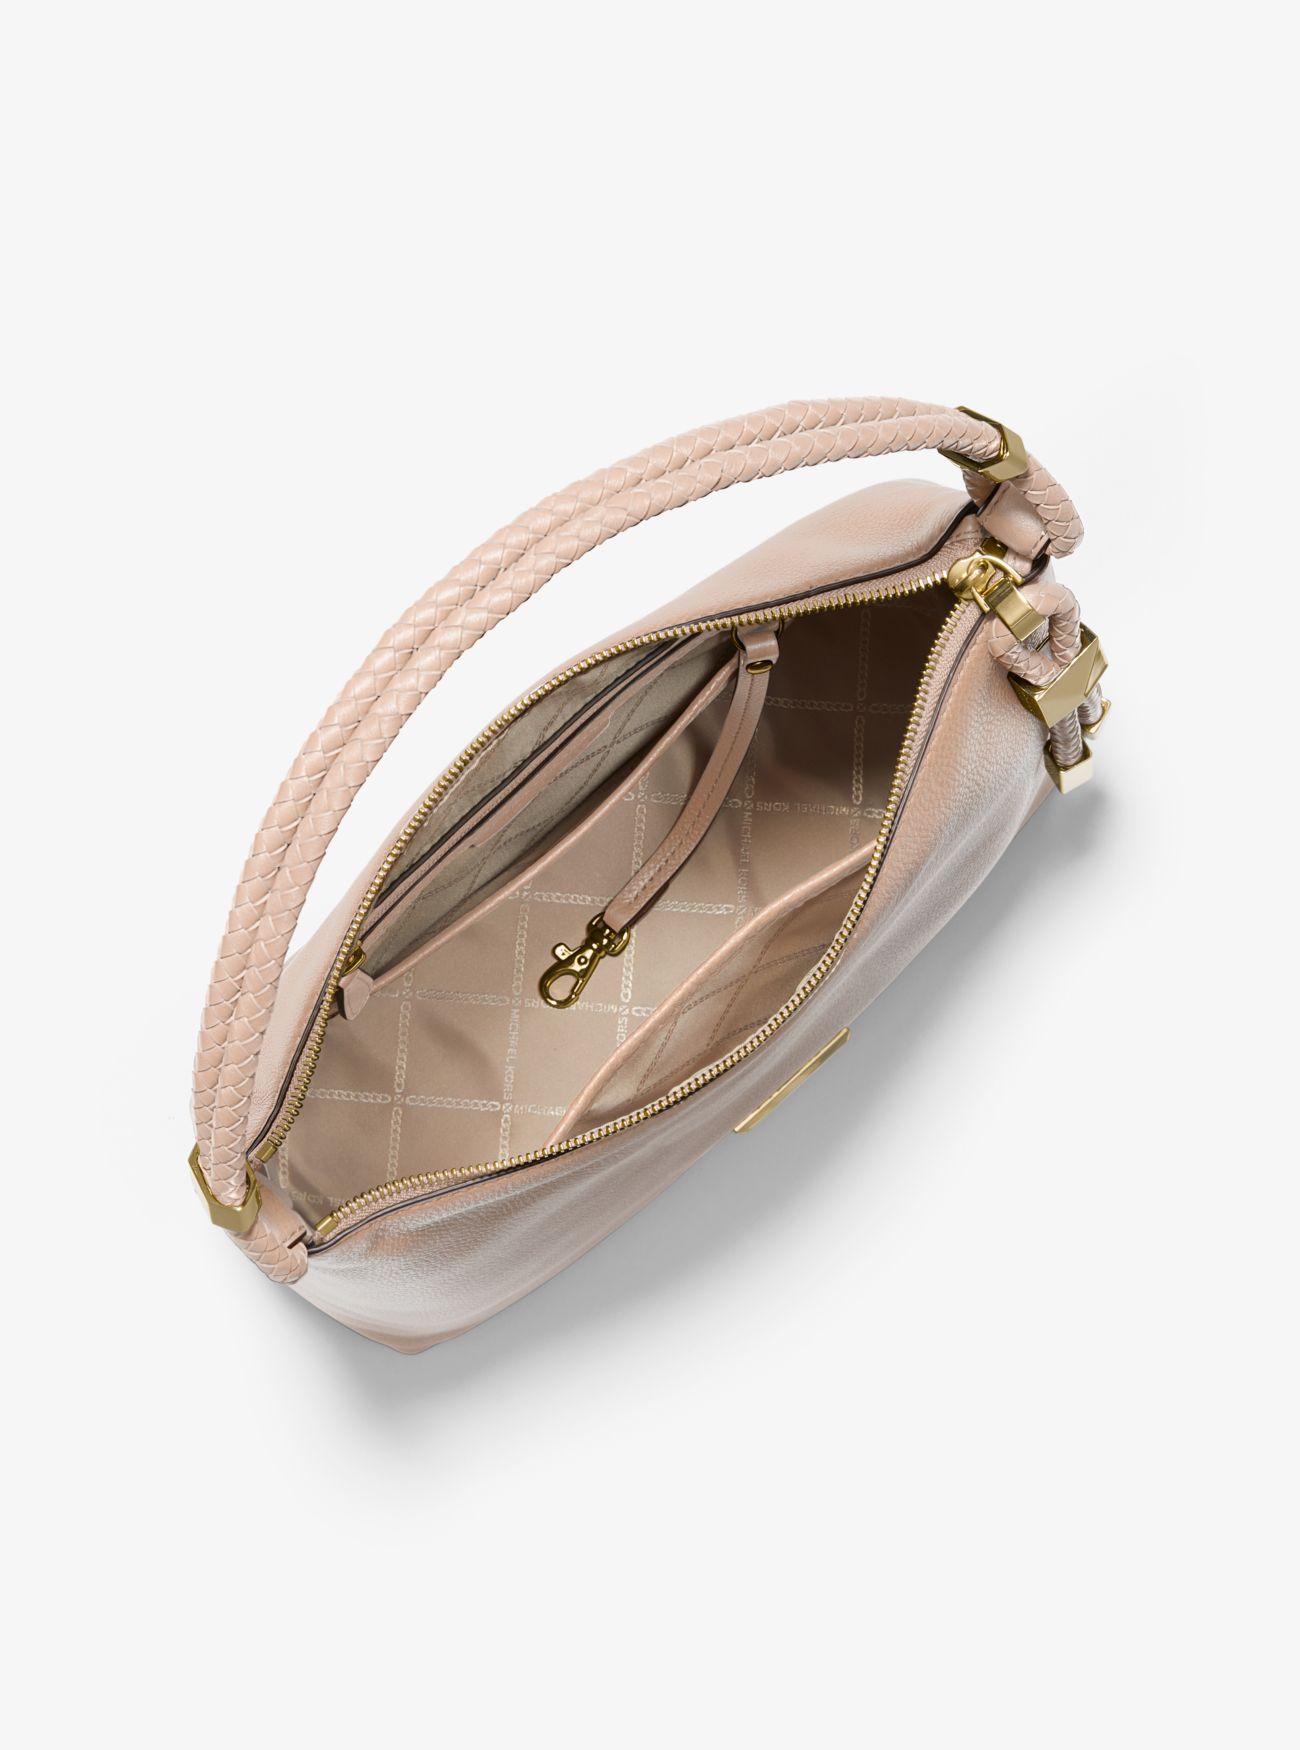 Michael Kors Lexington Medium Pebbled Leather Shoulder Bag in Pink - Lyst